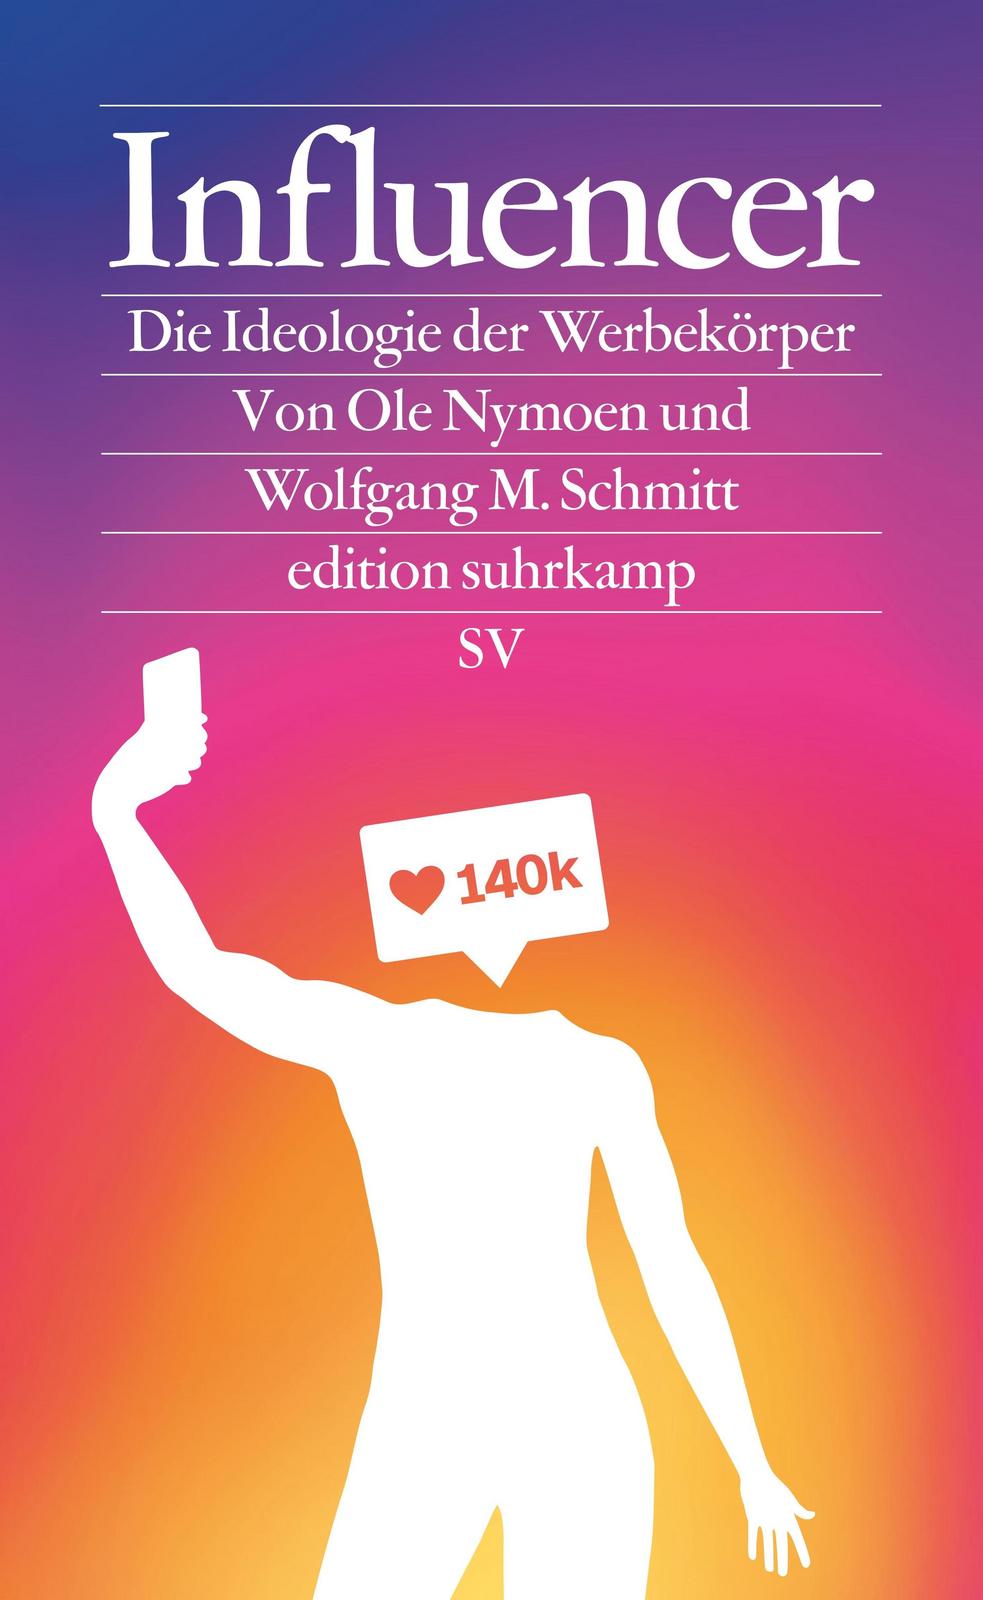 Wolfgang M. Schmitt, Ole Nymoen: Influencer (German language, 2021, Suhrkamp Verlag)